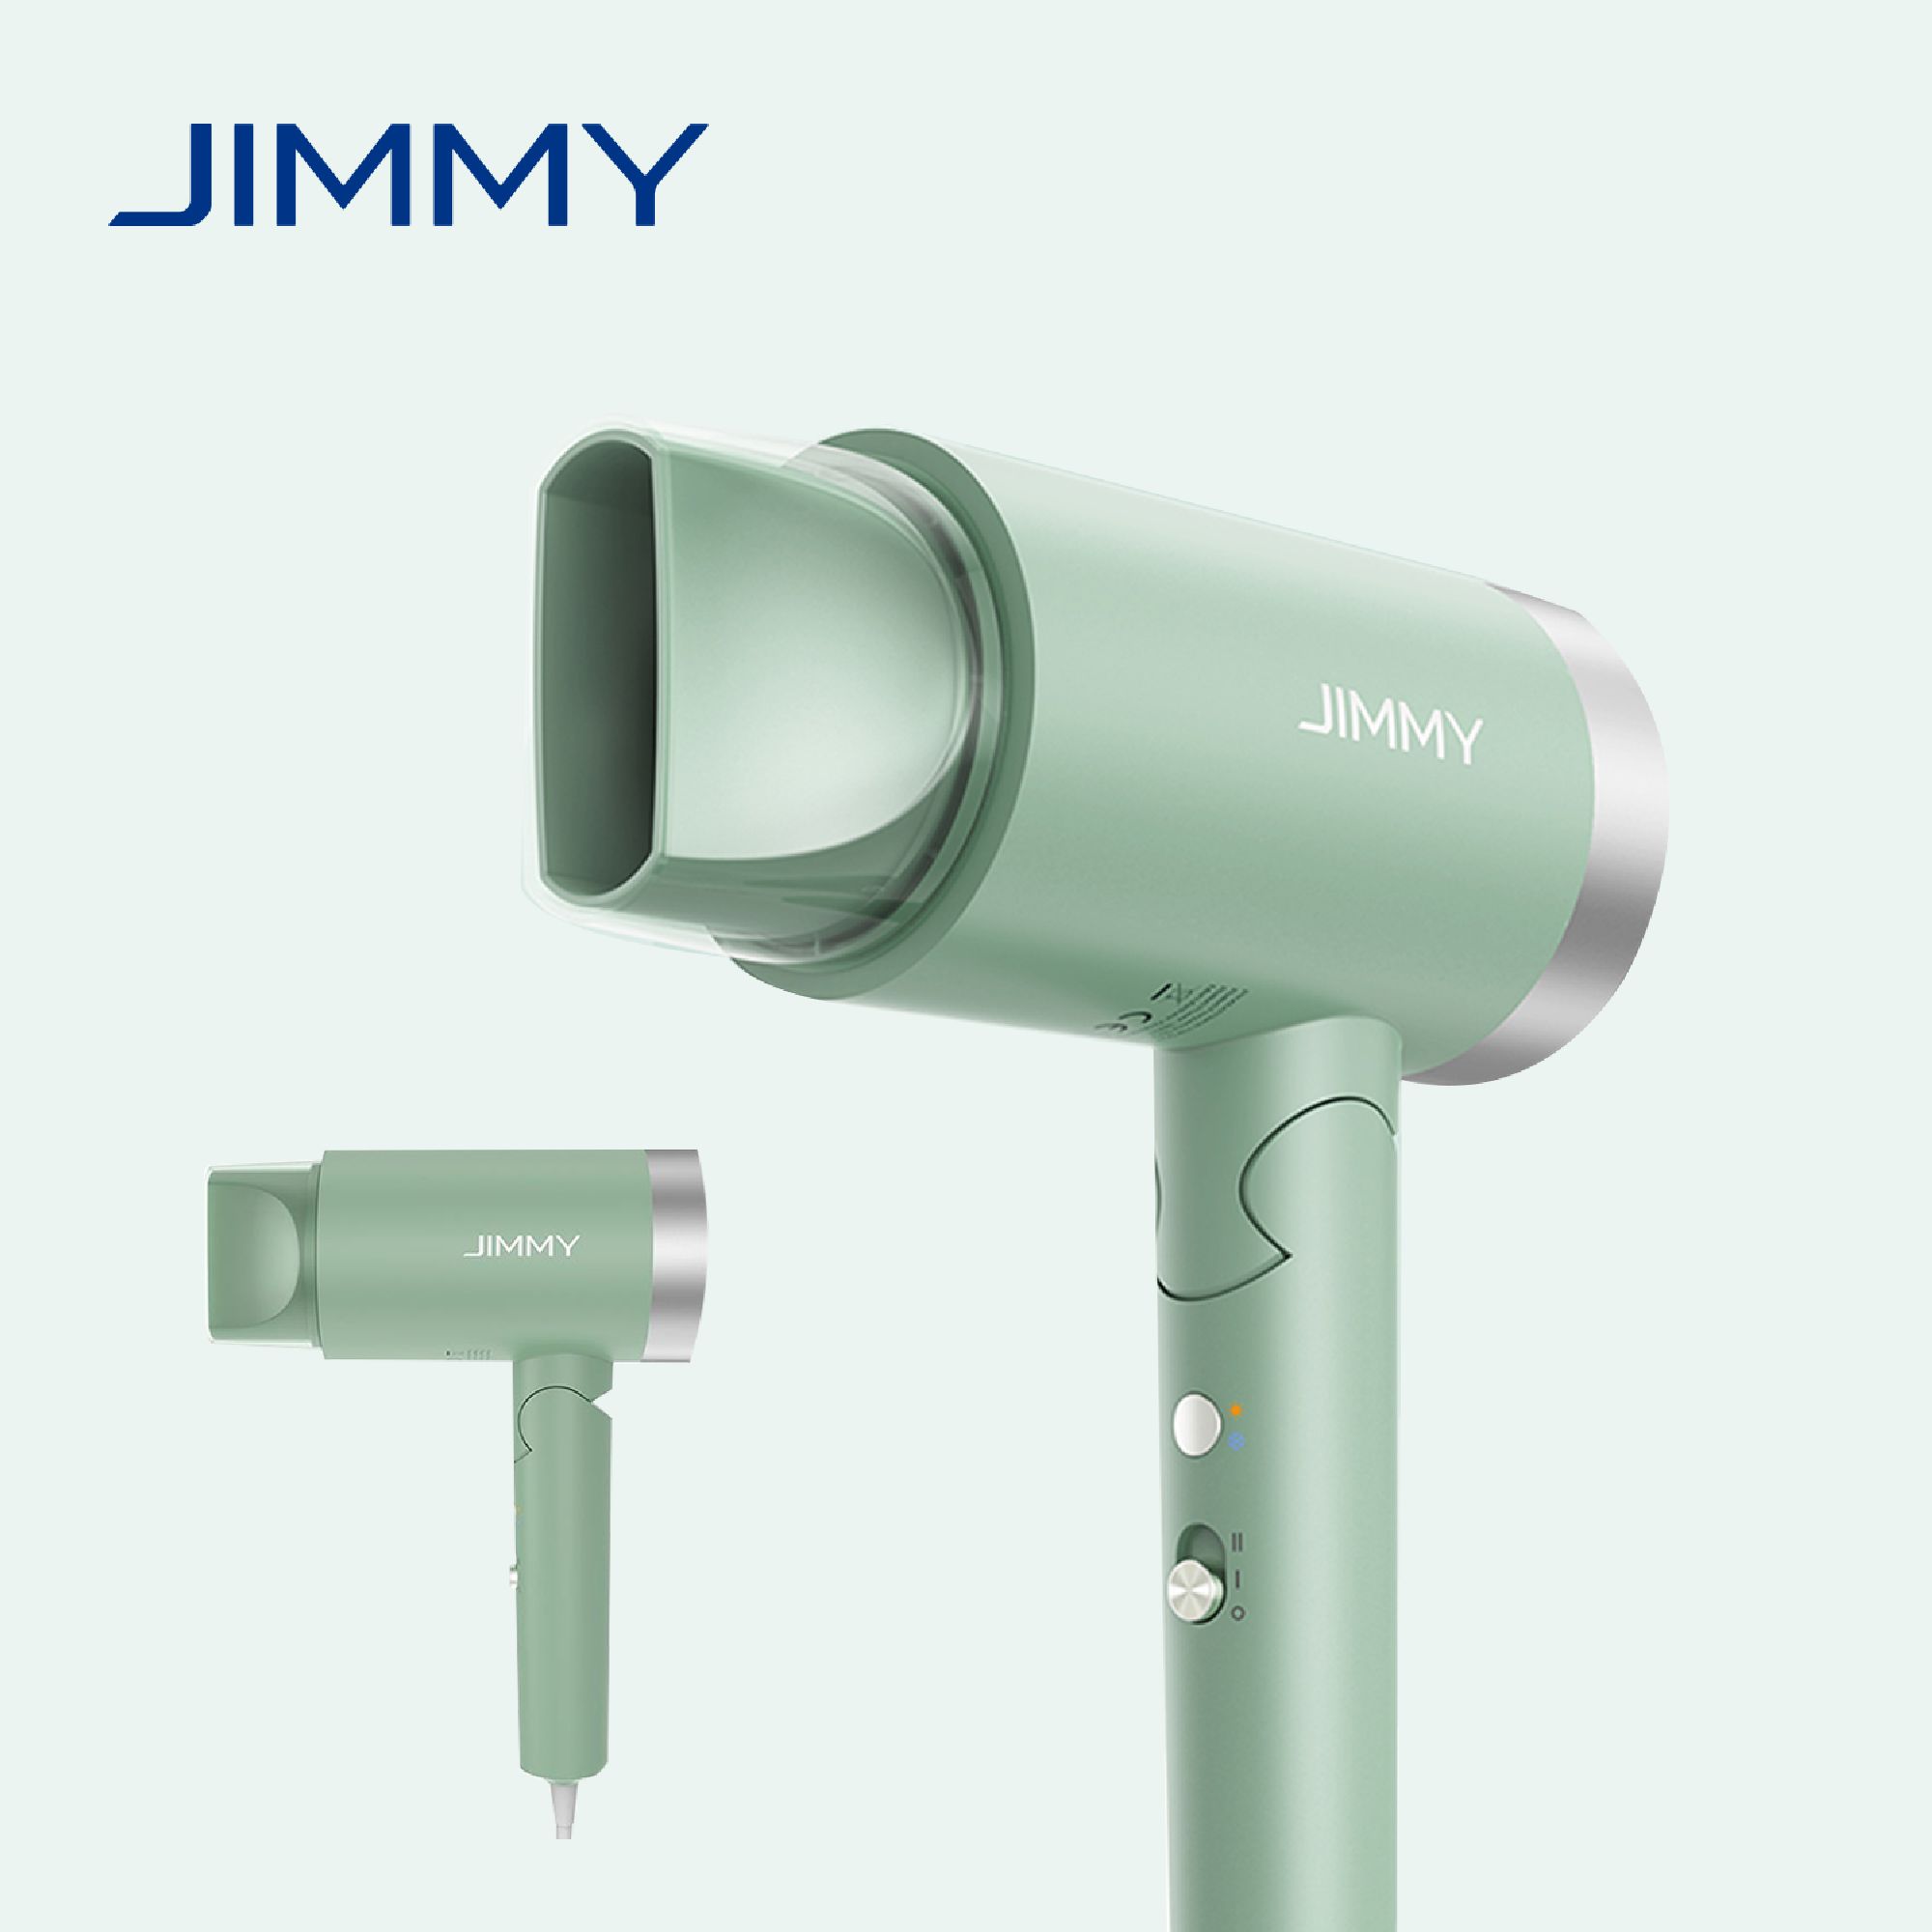 Фен Jimmy F2 1800Вт, режимов: 2, насадок: 1, ионизация, зеленый